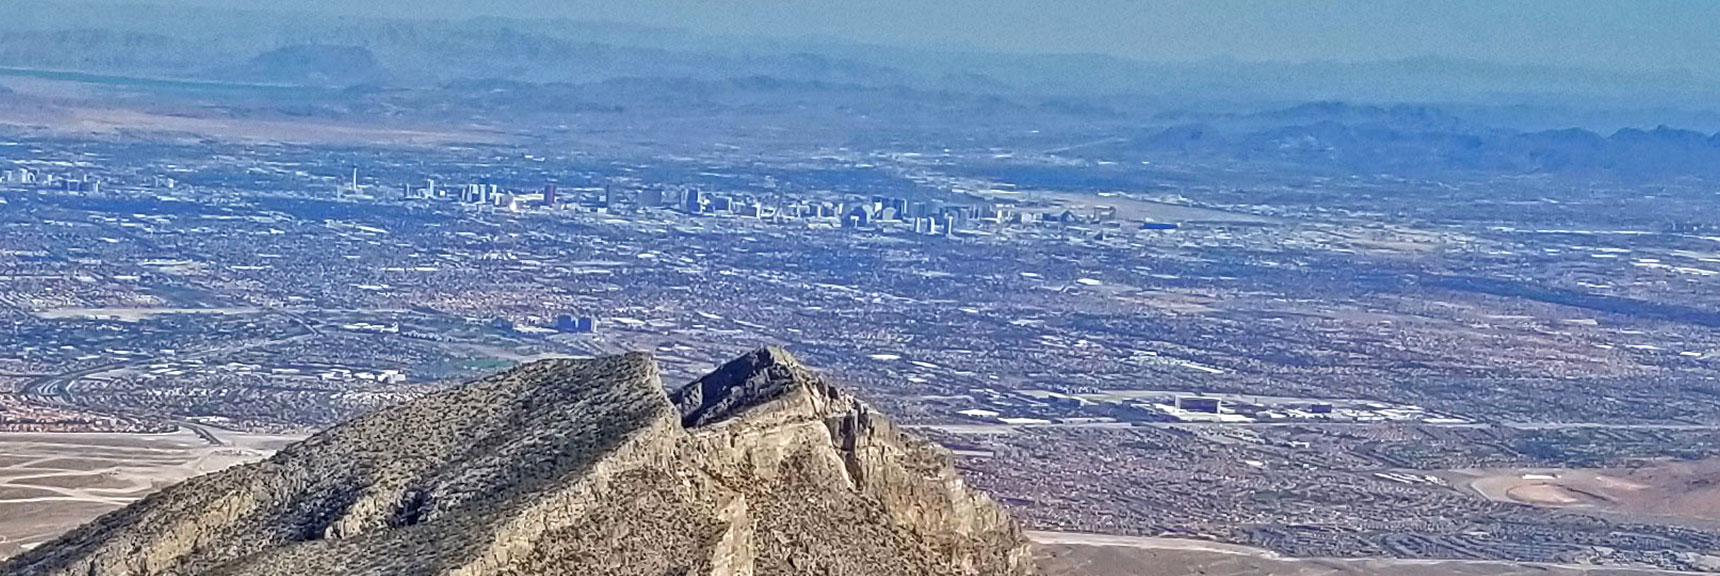 Damsel Peak and Las Vegas Strip from La Madre Mt Summit | La Madre Mountain,, El Padre Mountain, Burnt Peak | La Madre Mountains Wilderness, Nevada